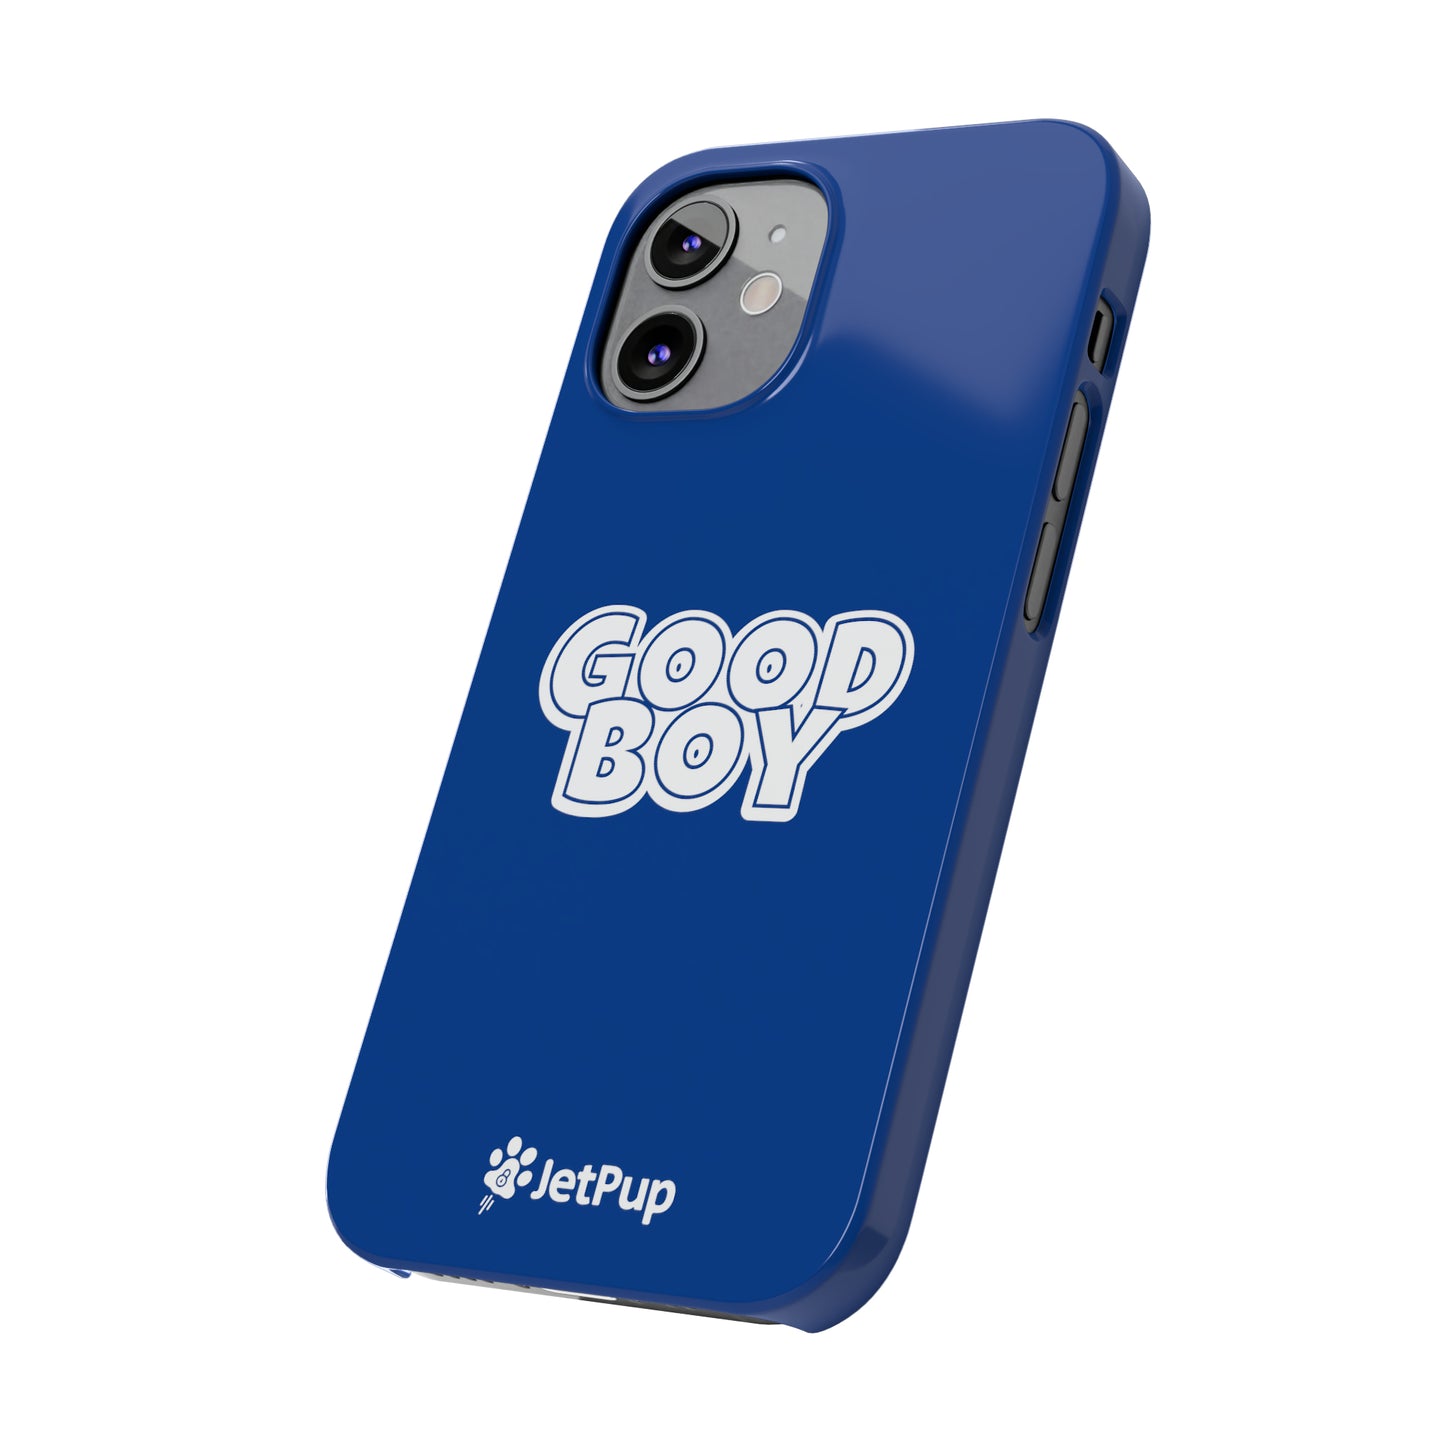 Good Boy Slim iPhone Cases - Blue